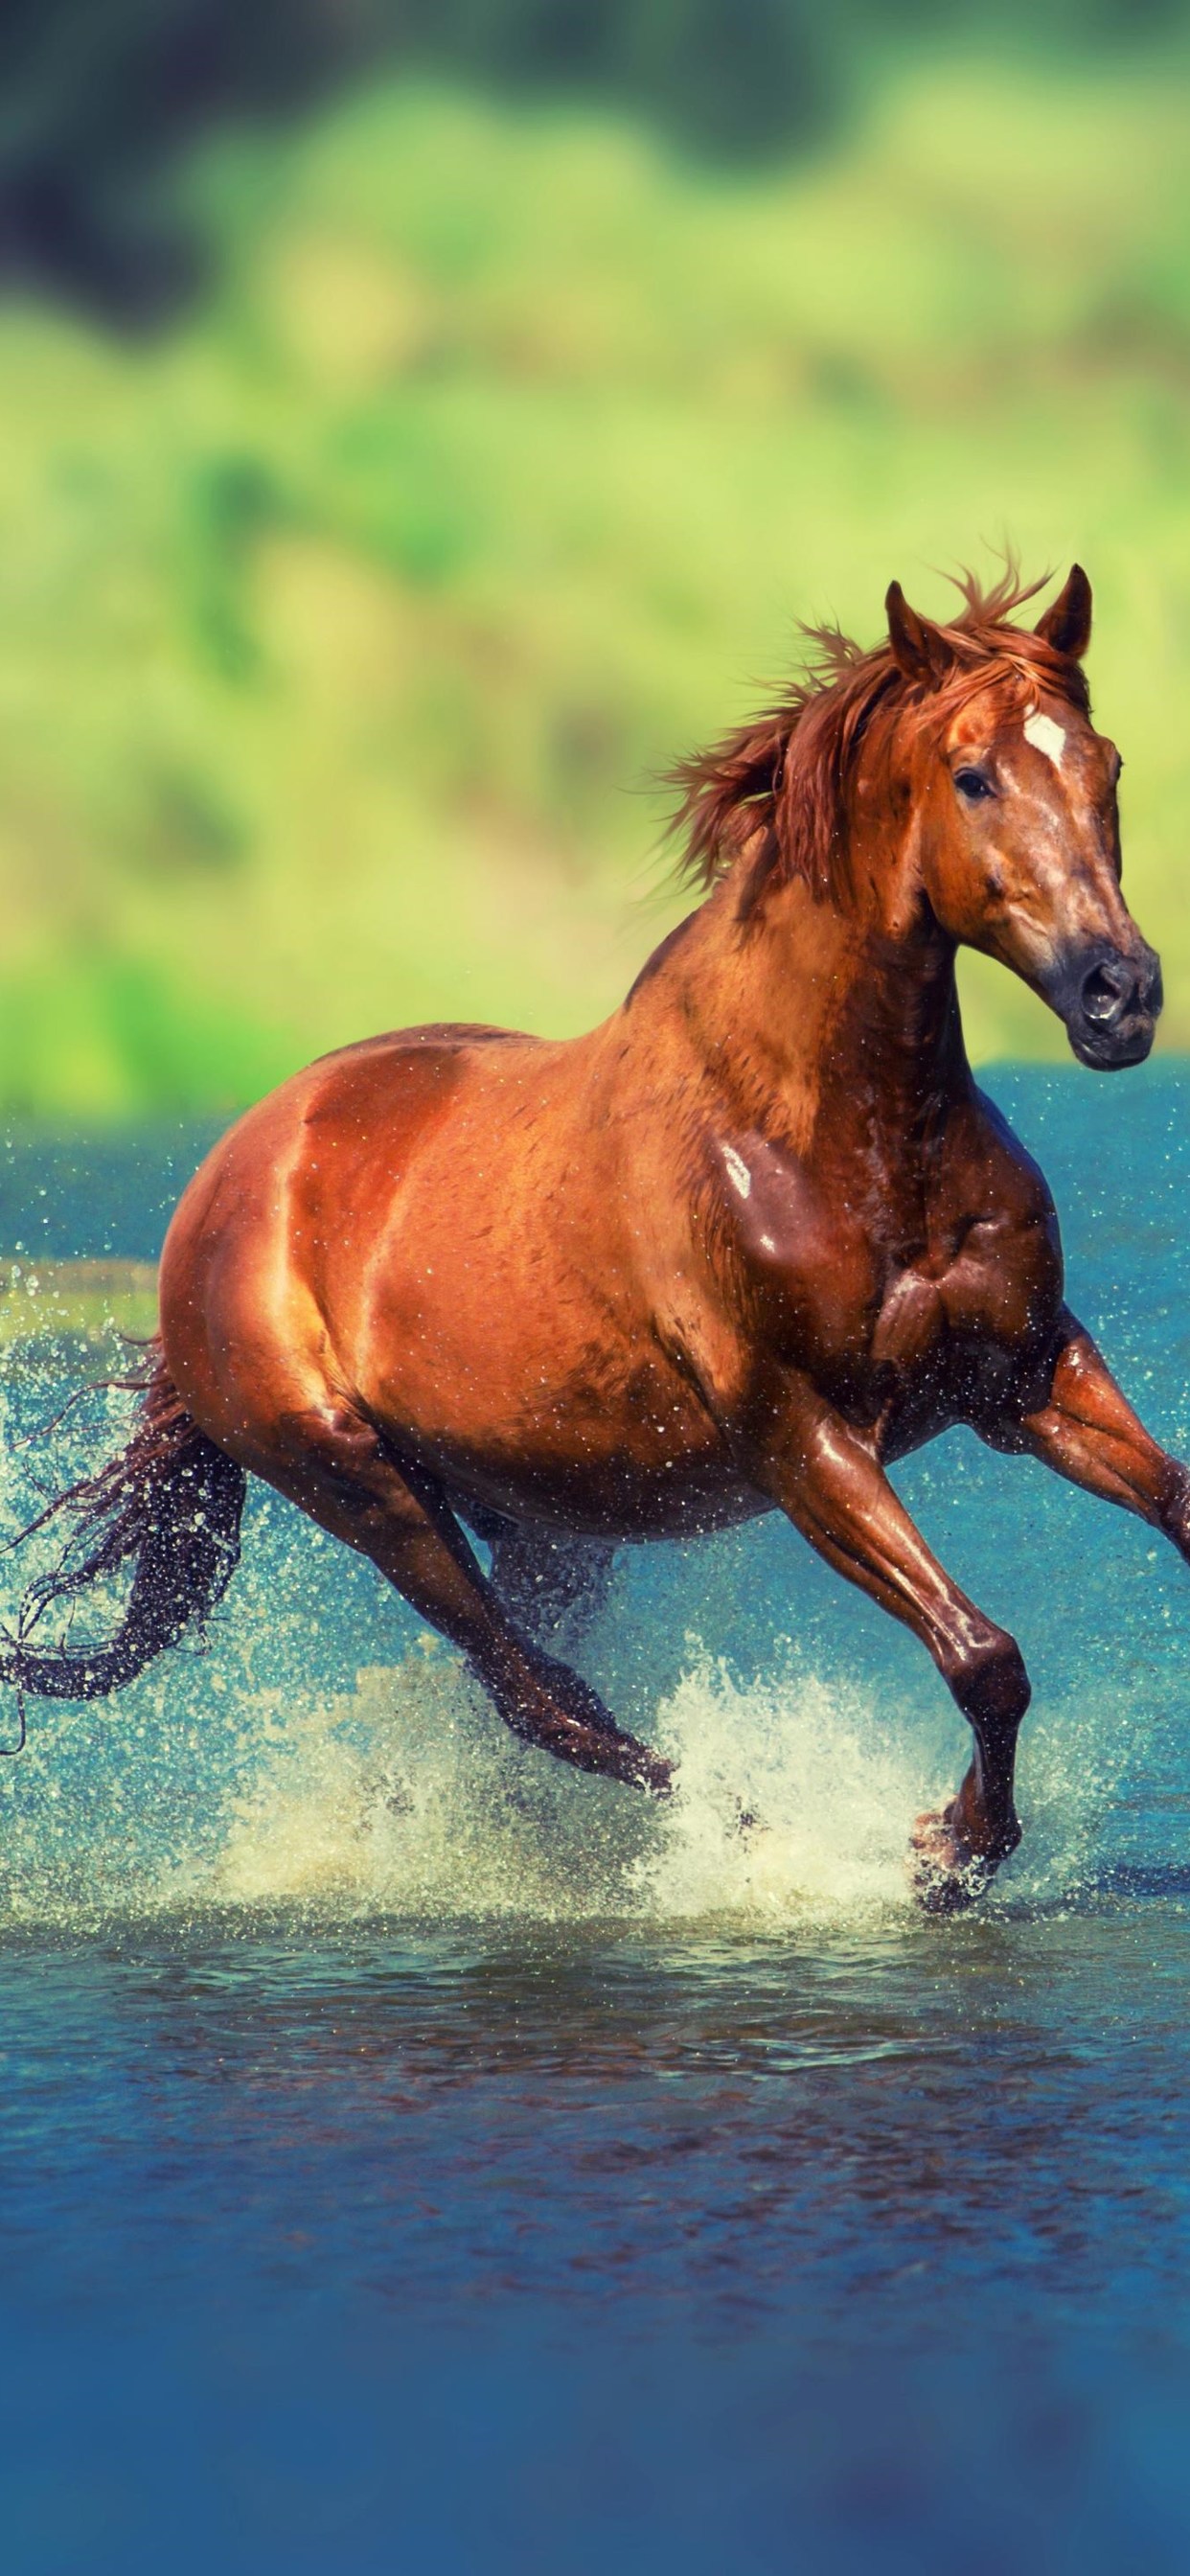 196 1963929 Running Horse In Water Wild Horses 